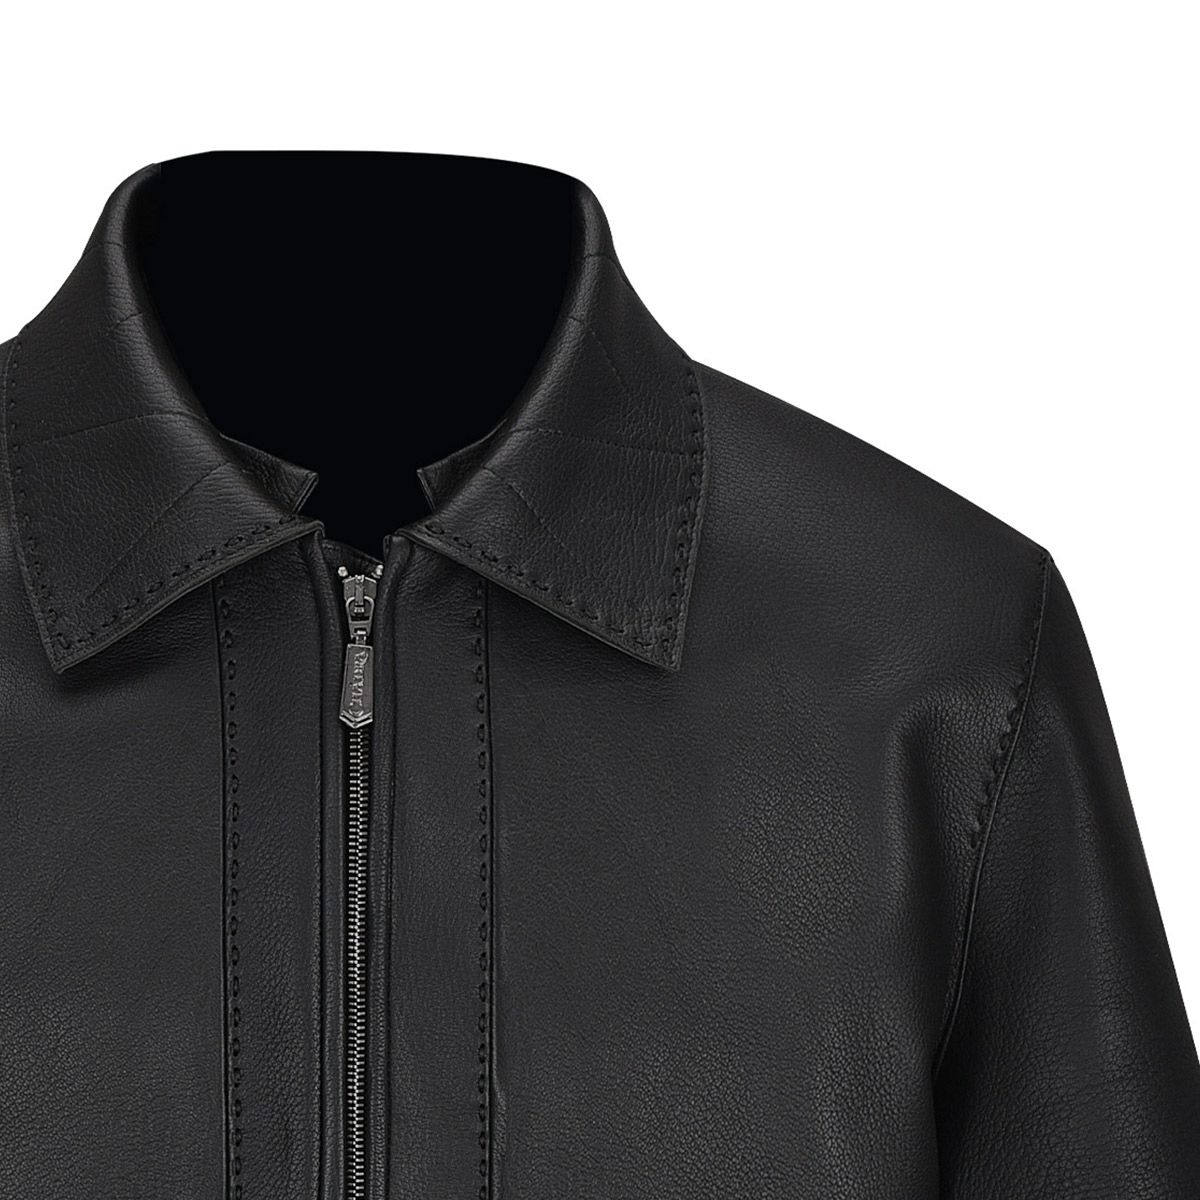 H321COB - Cuadra black casual fashion goat leather motorcycle aviator jacket for men-CUADRA-Kuet-Cuadra-Boots